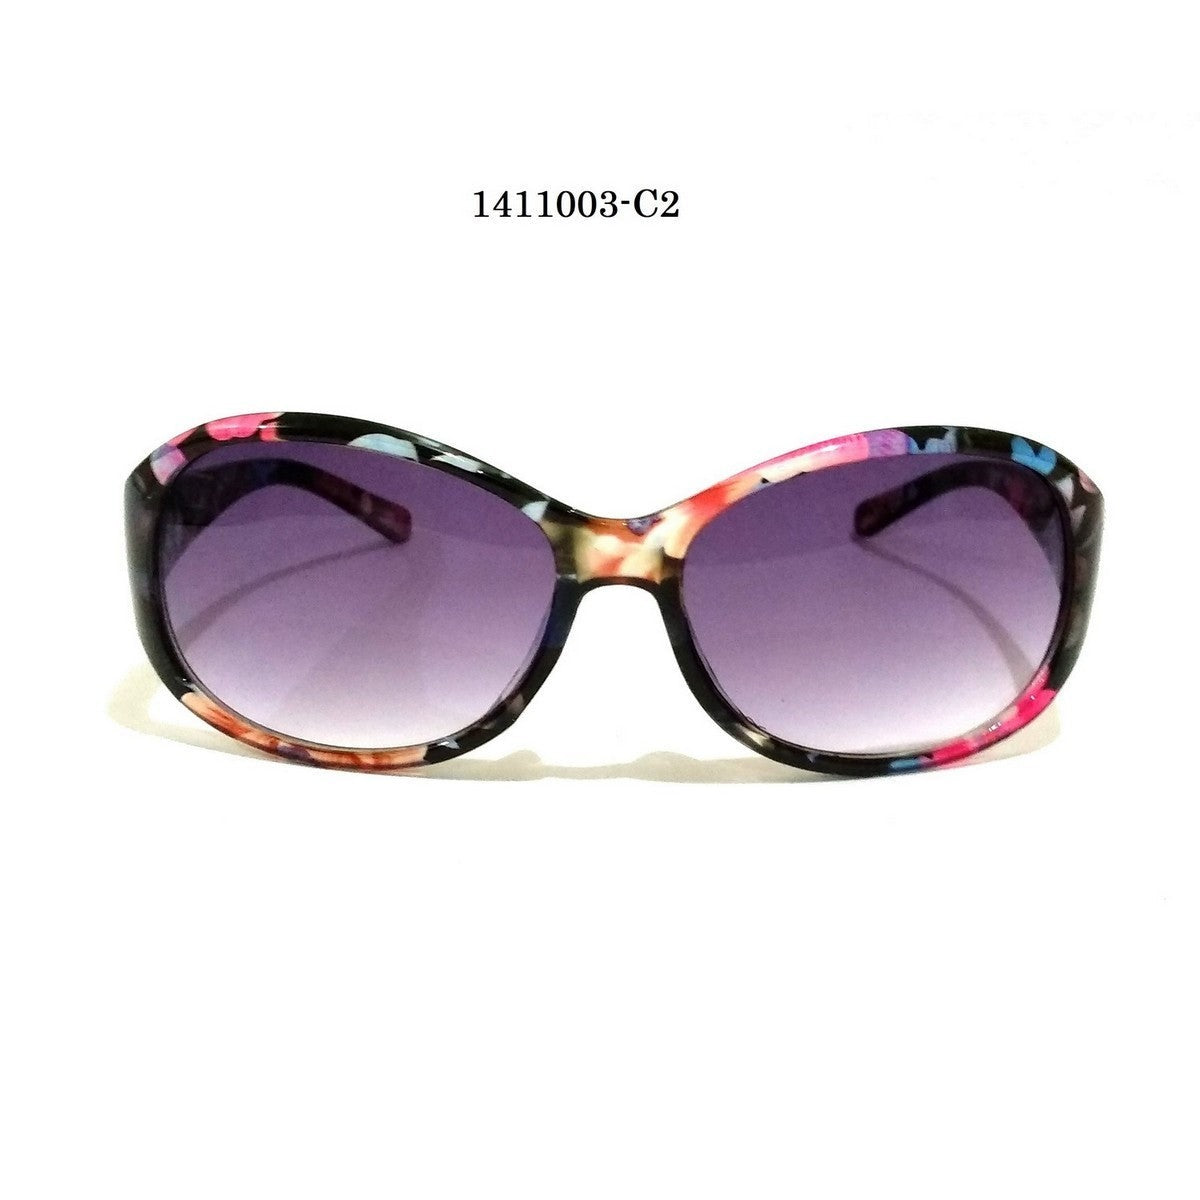 Floral Print Ladies Sunglasses for Women Model 1141003C2 - Glasses India Online